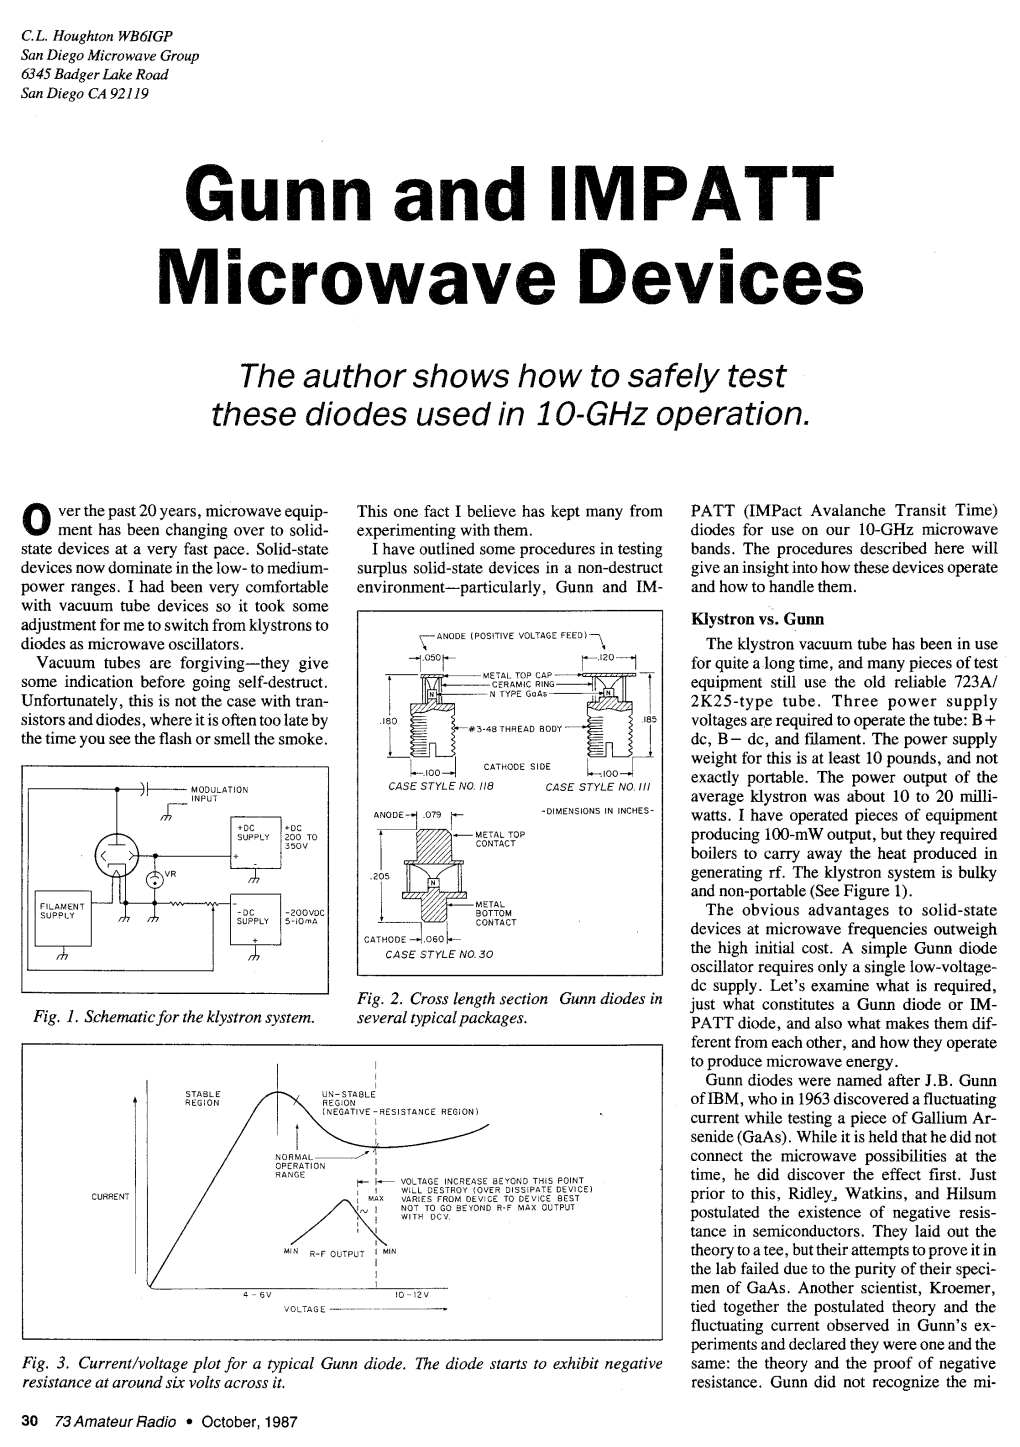 Gunn and IMPATT Microwave Devices.Pdf